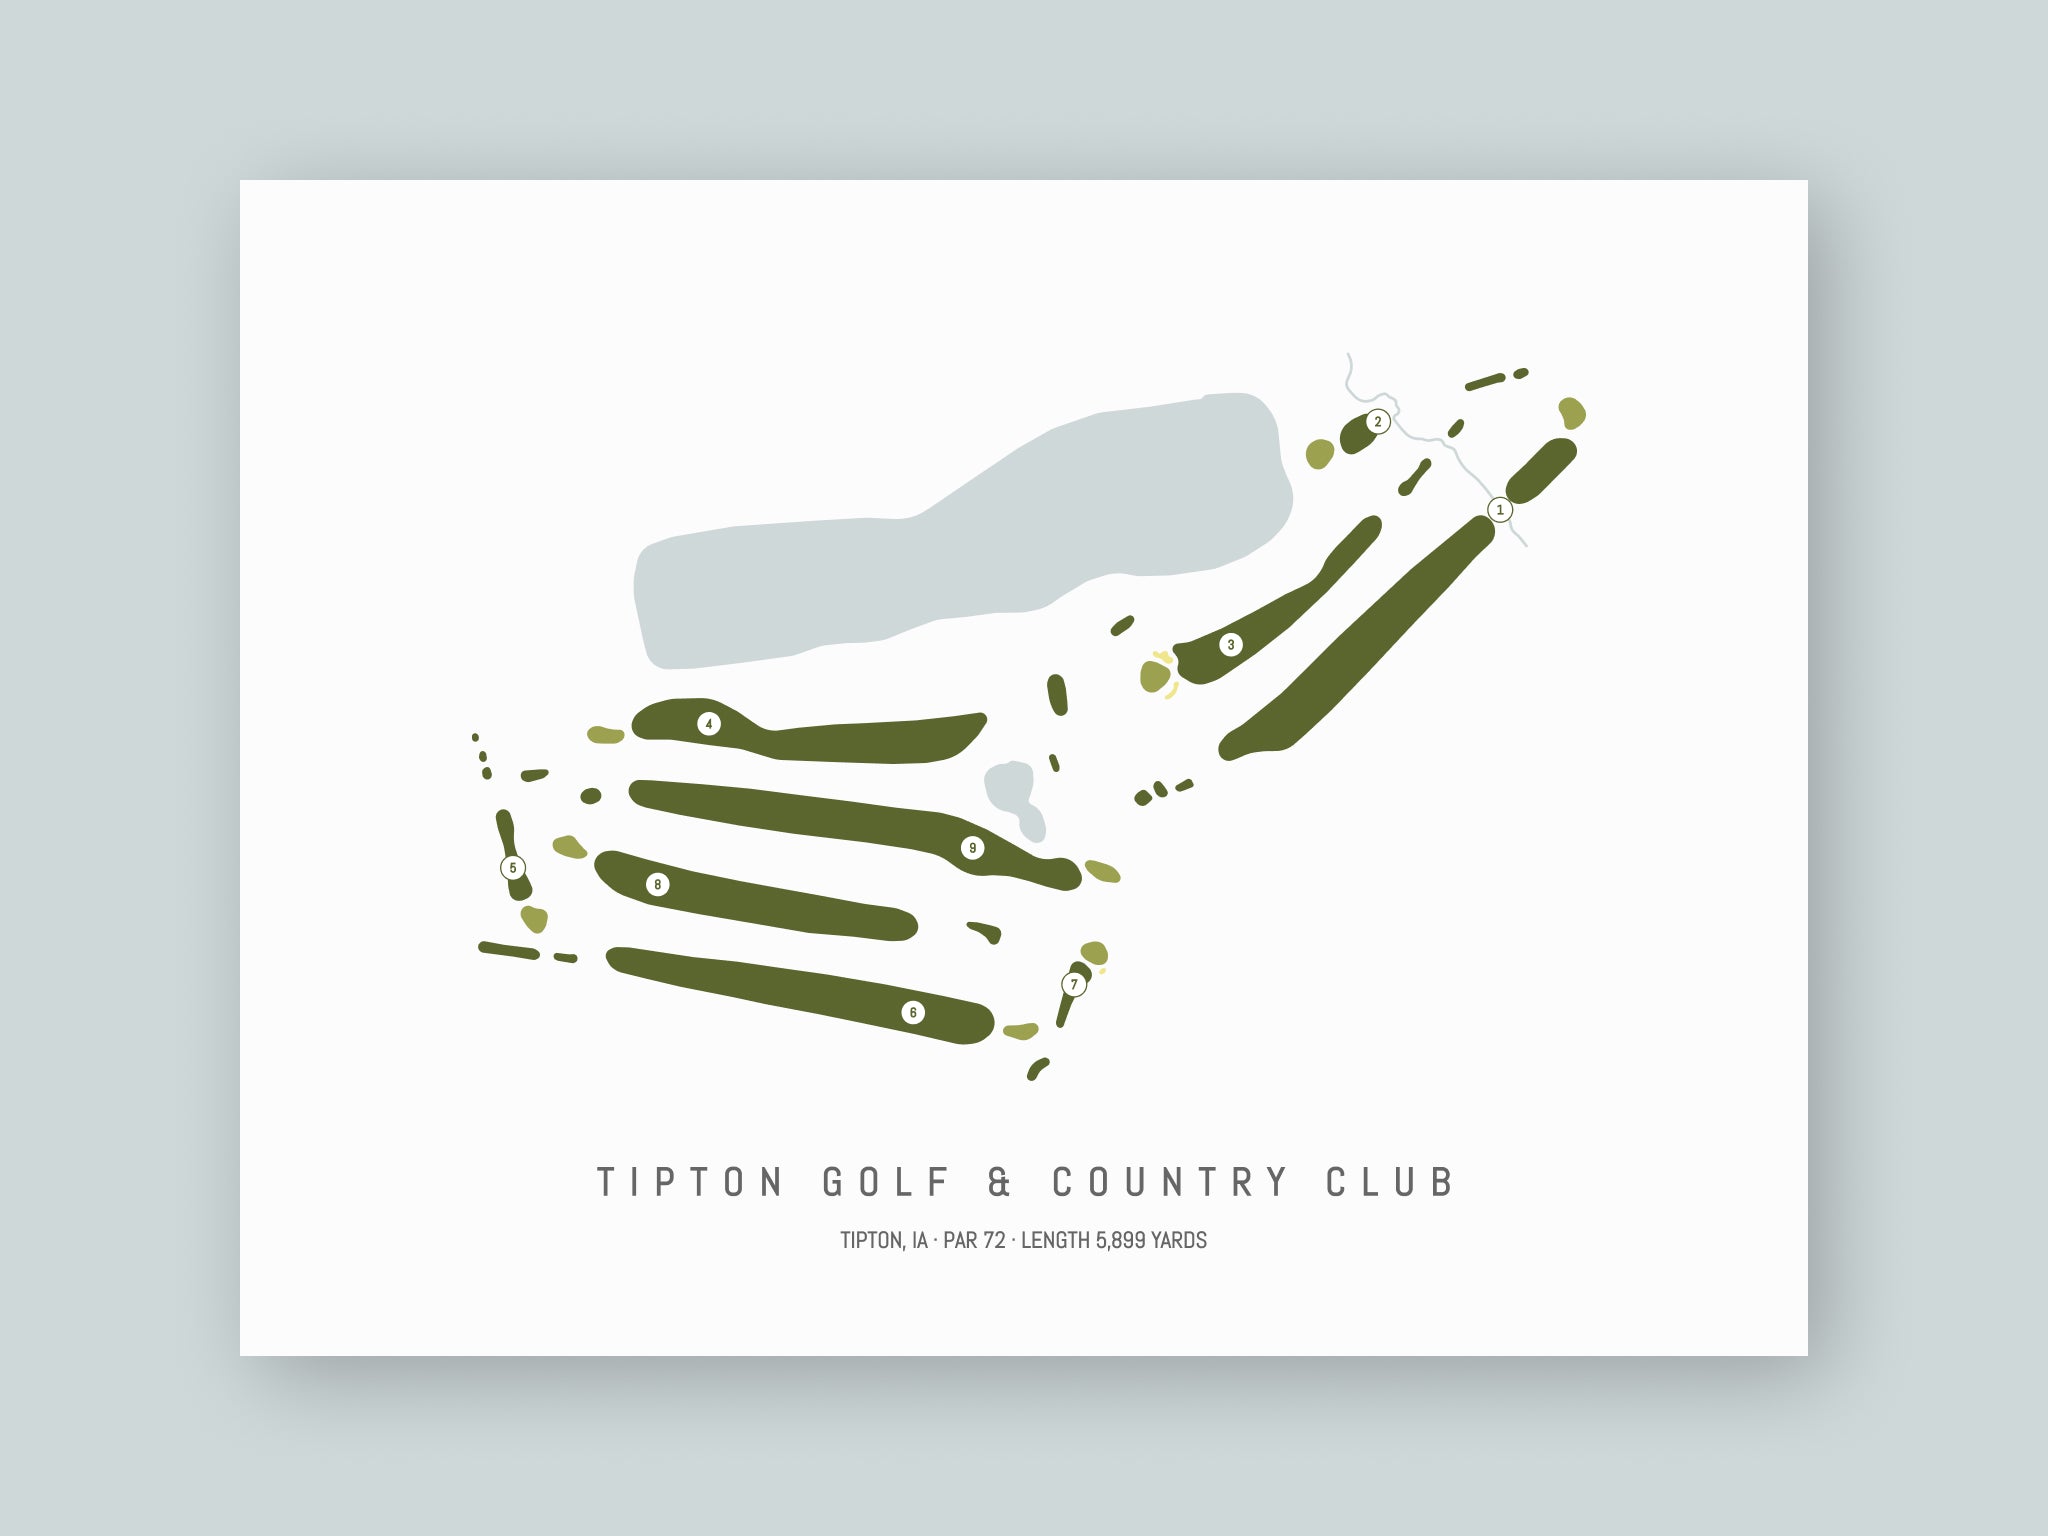 Tipton Golf & Country Club